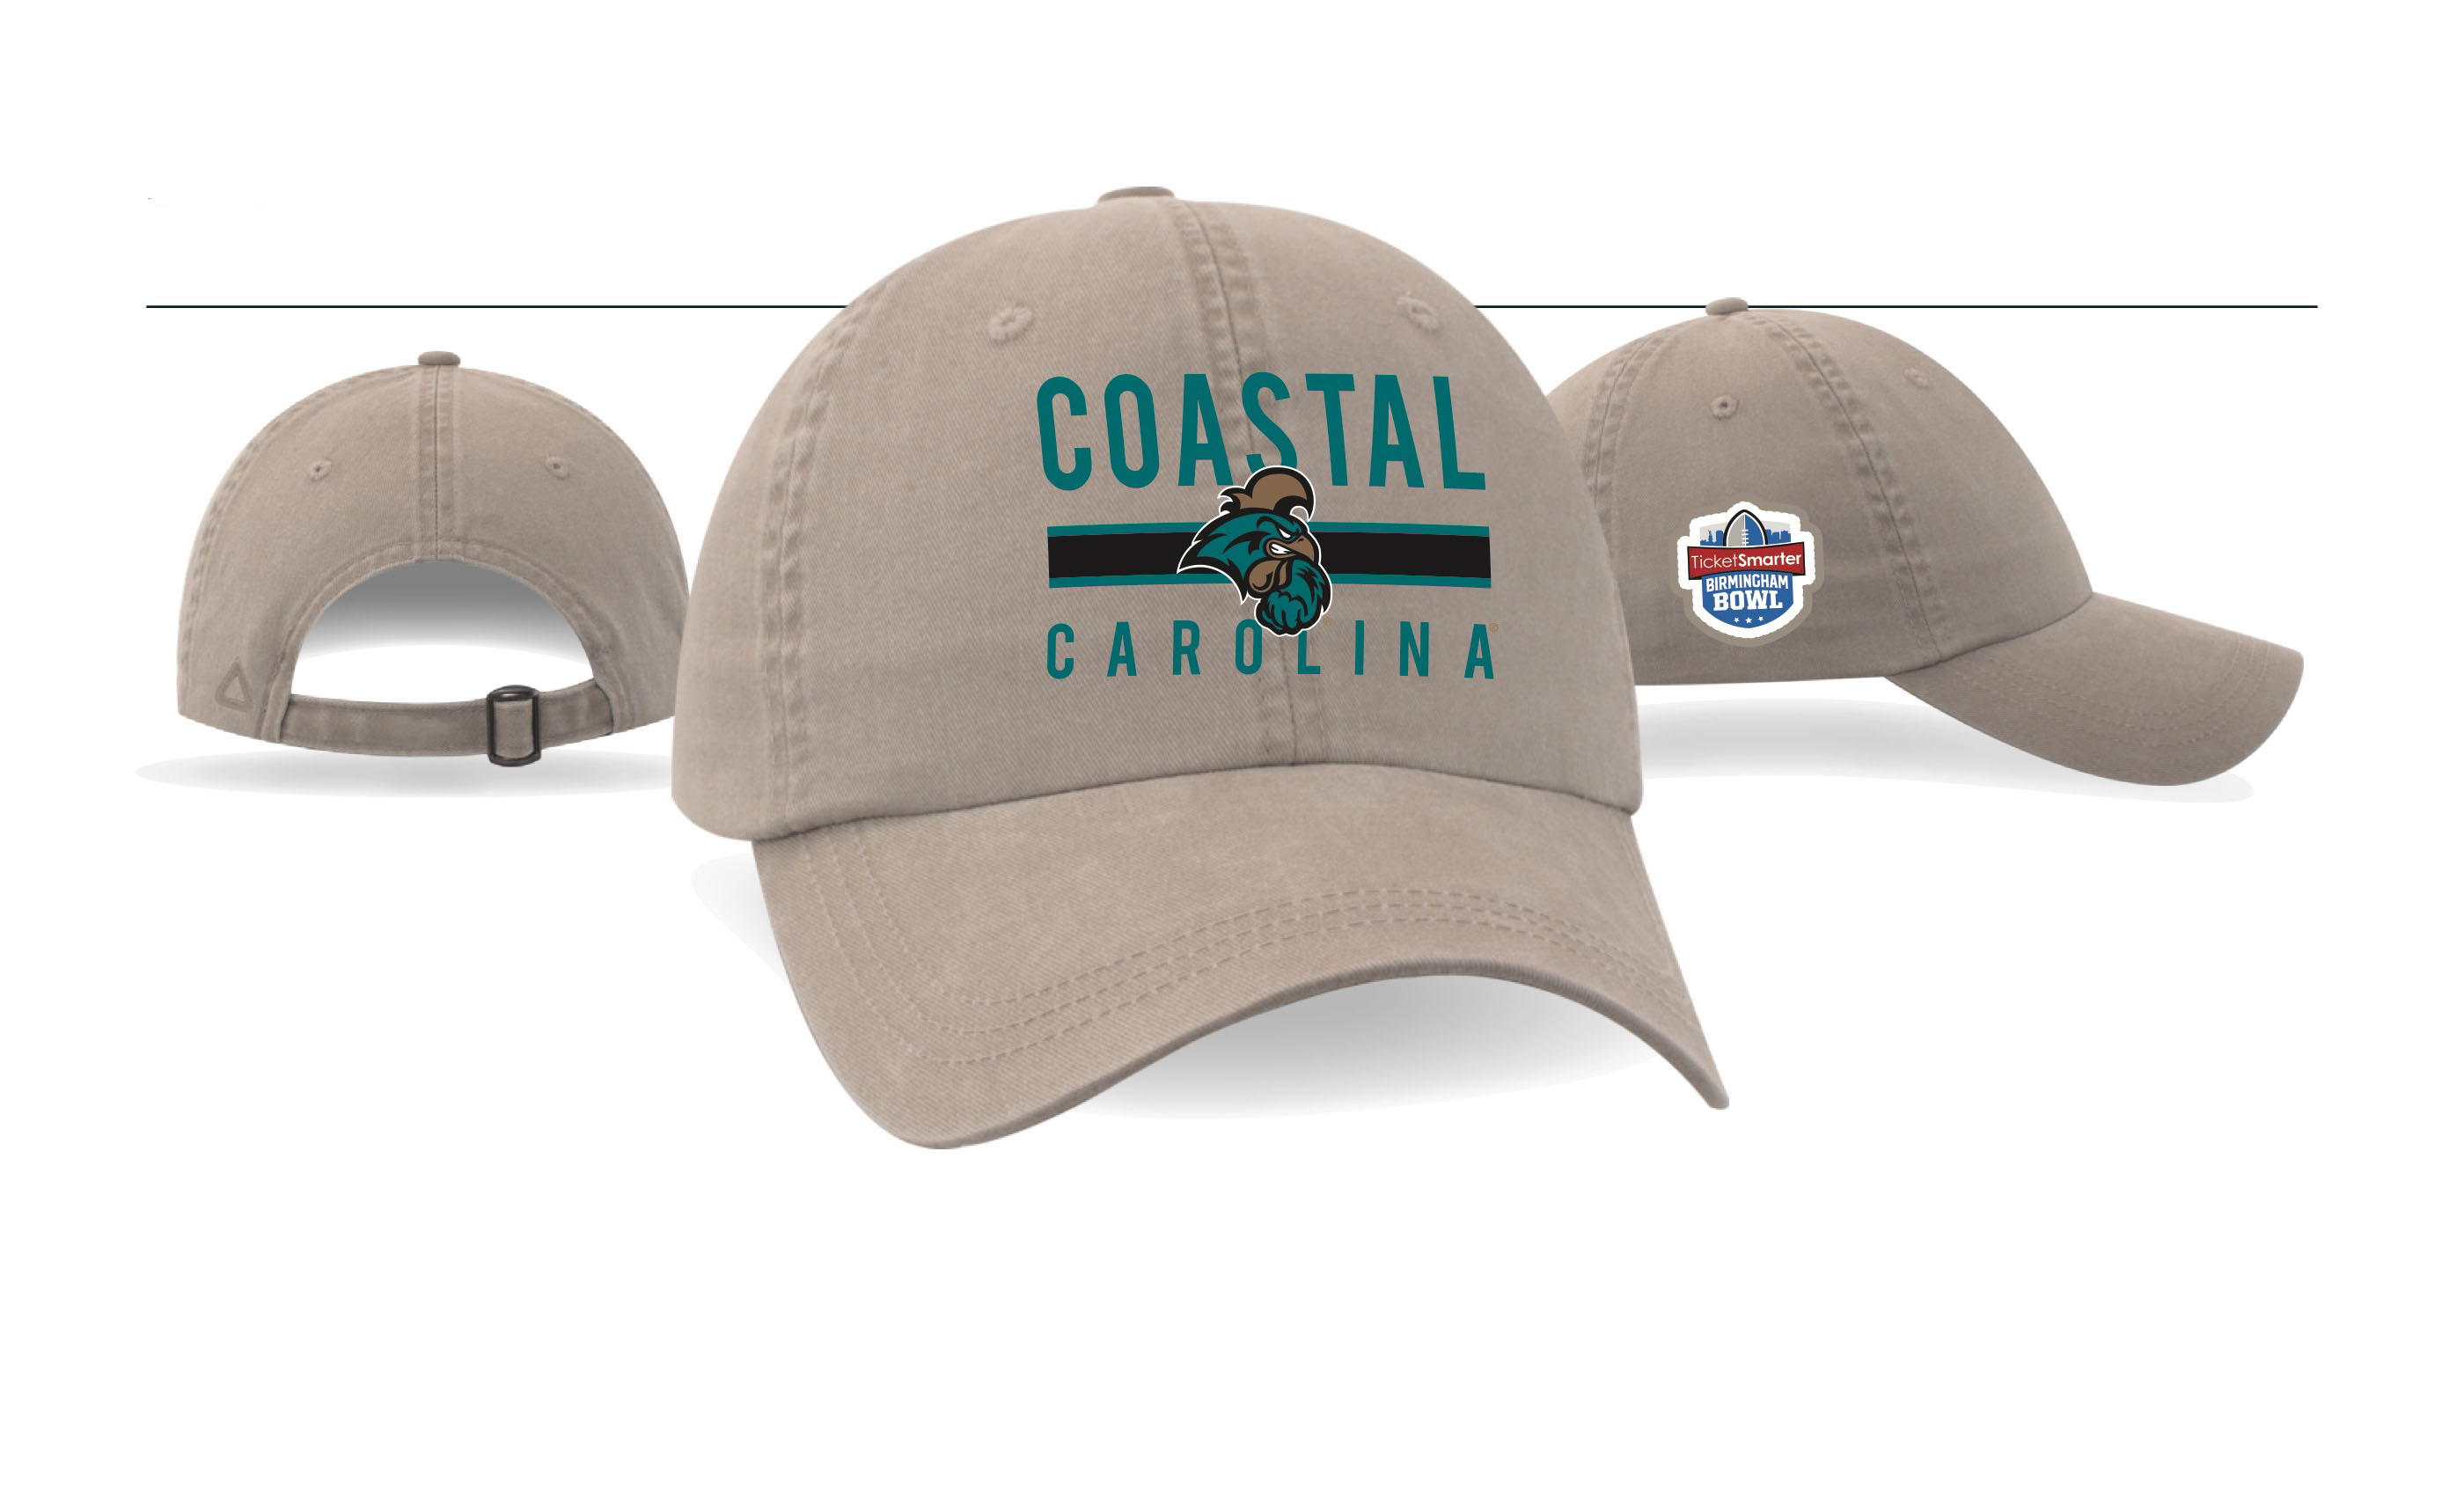 Birmingham Bowl Coastal Carolina Stripe Tan Cap